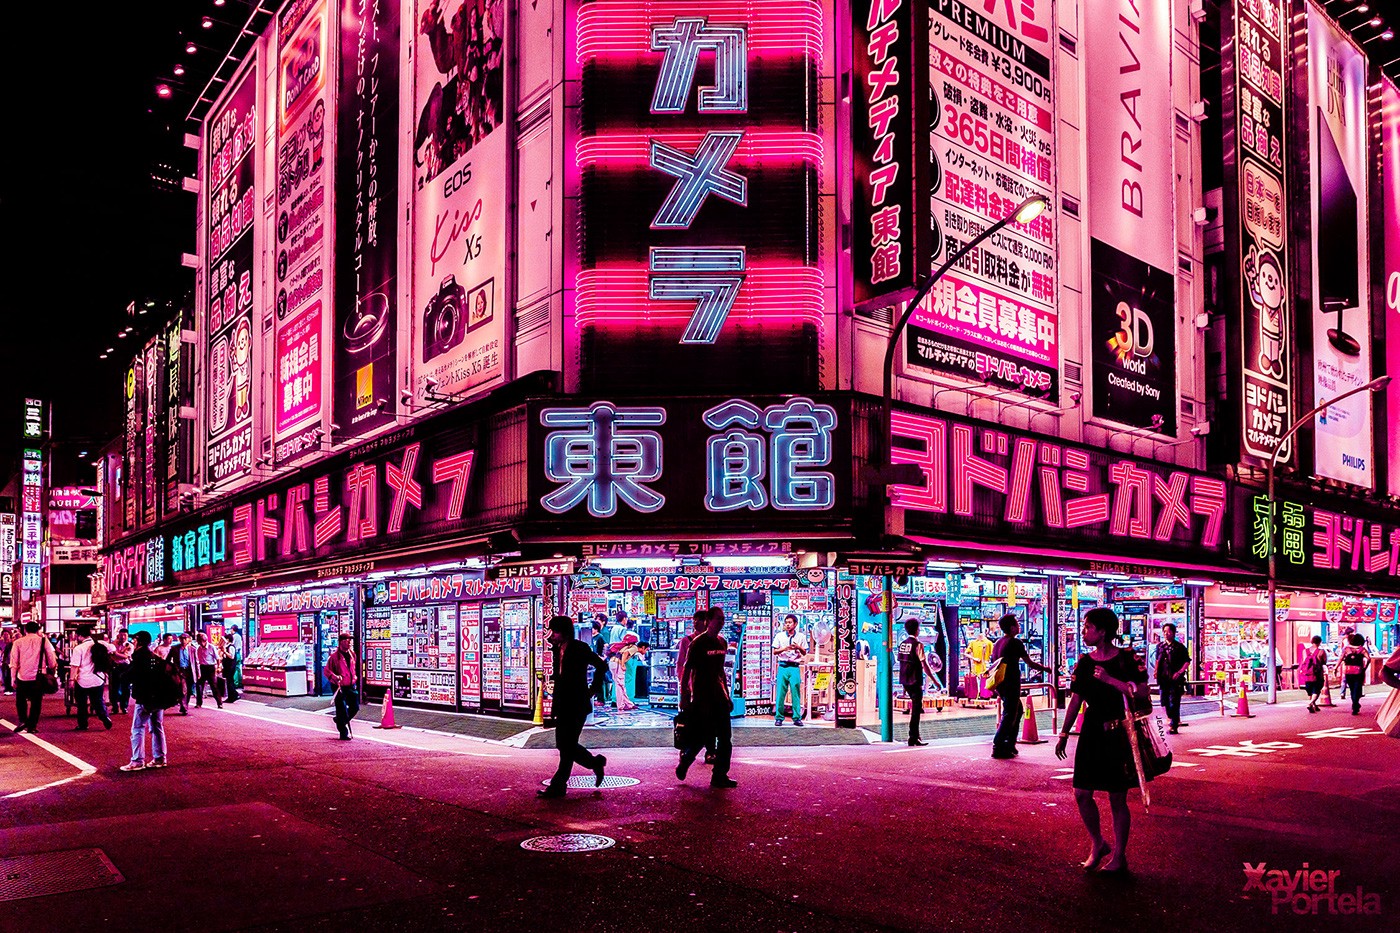 For Tokyo, it’s probably Yodobashi Camera Store in Shinjuku.